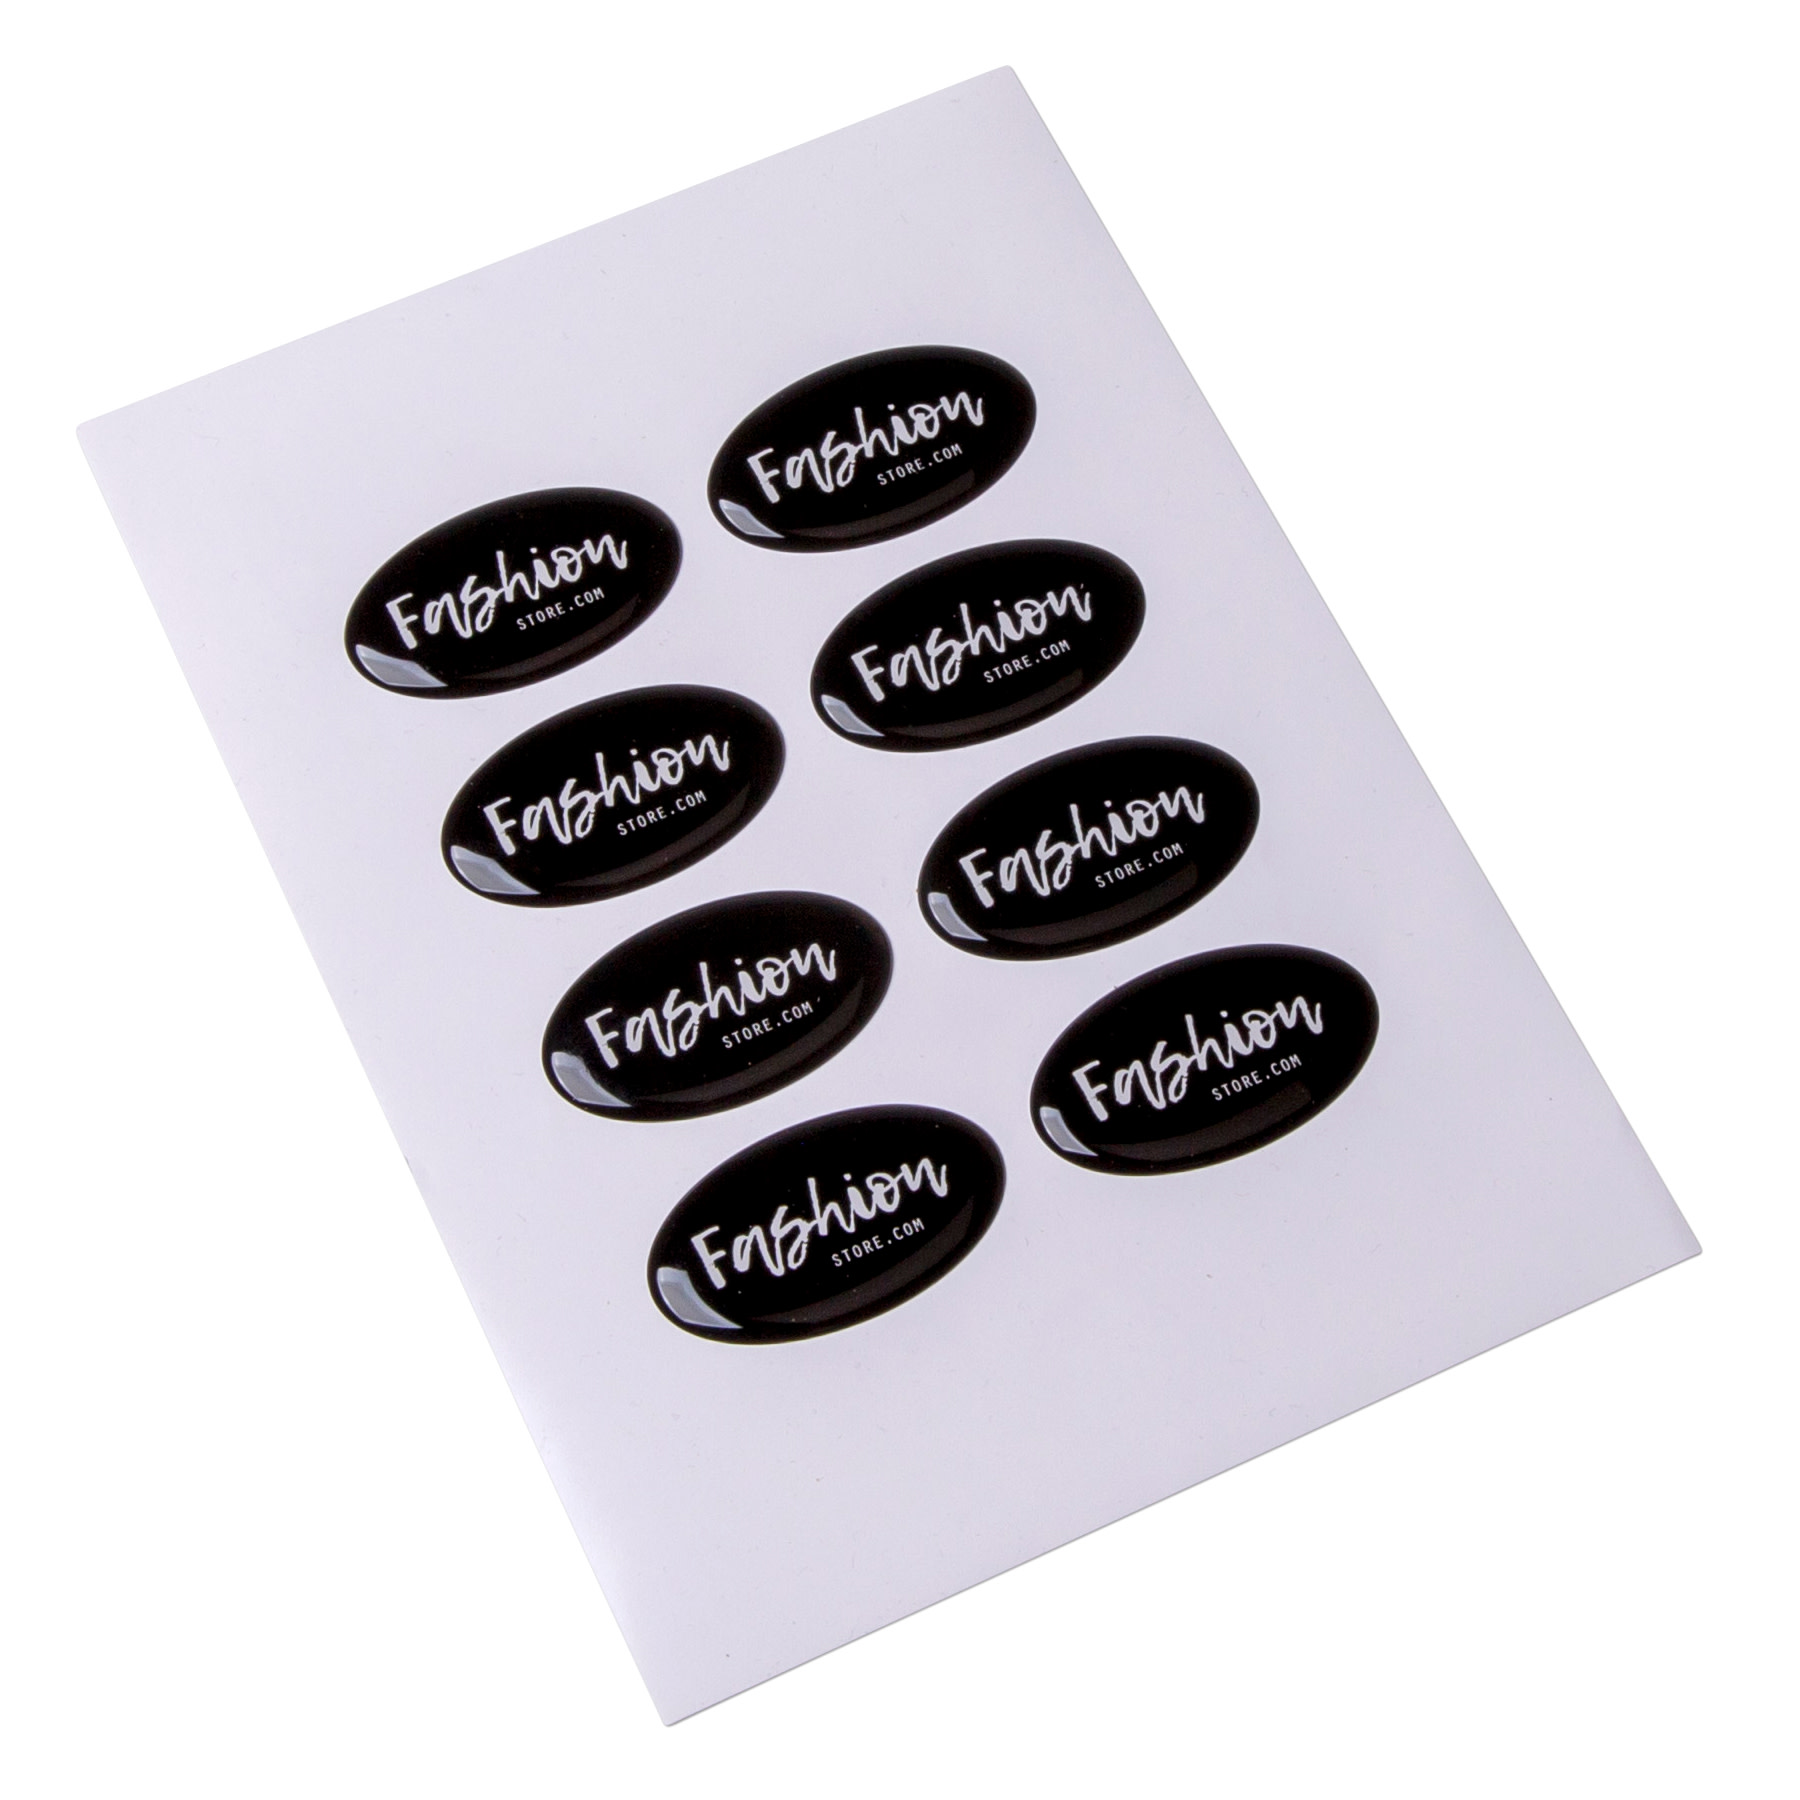 Gewoon Fahrenheit Echt niet Stickers bestellen | maak stickers met logo of eigen ontwerp |  Drukwerkdeal.nl